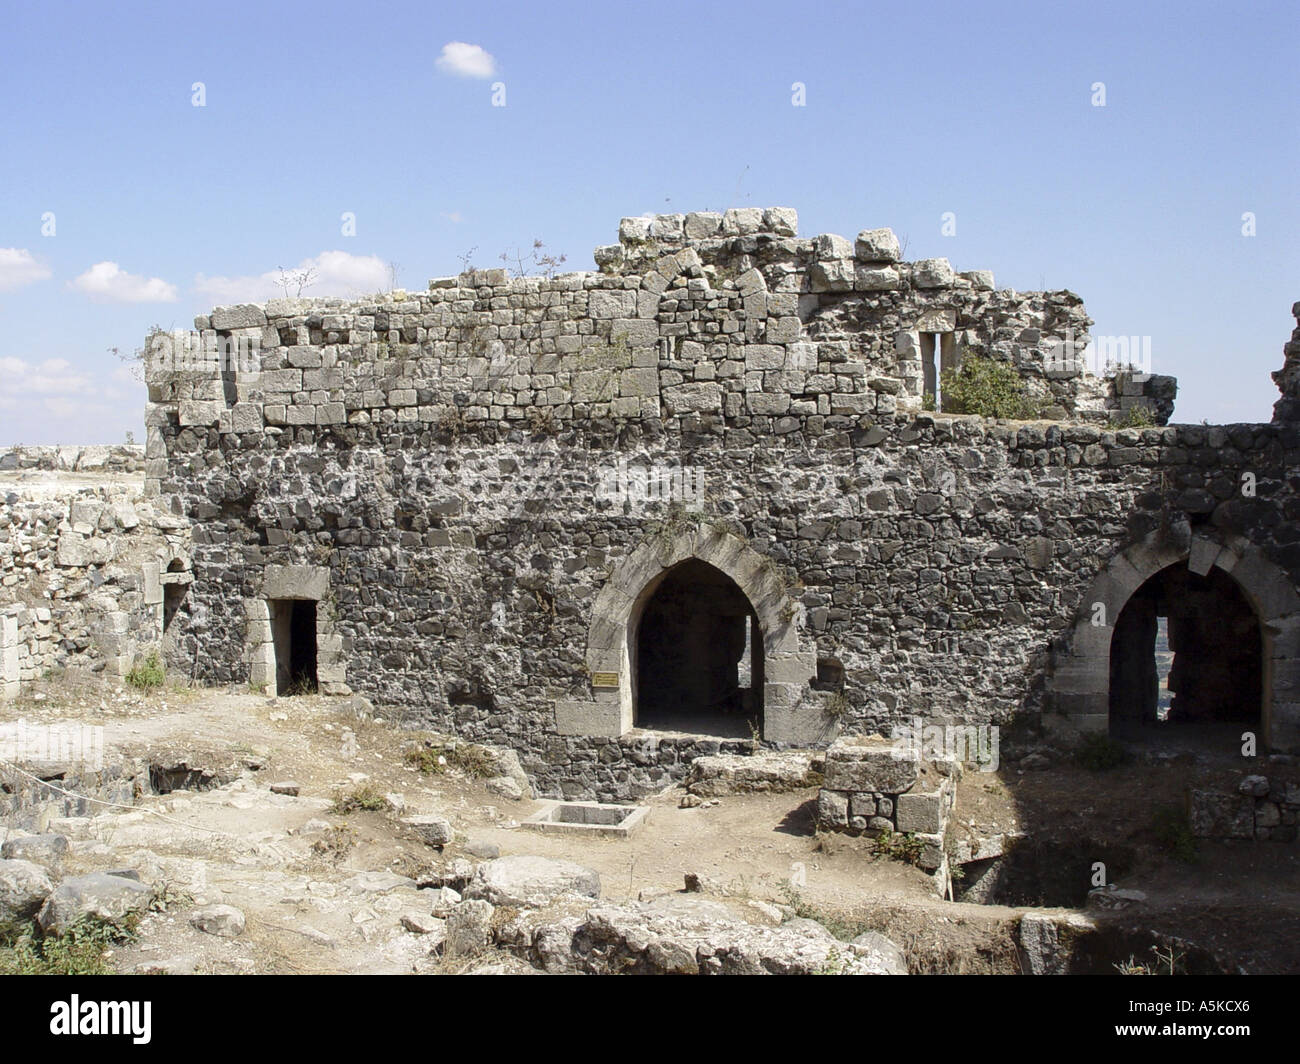 Crac des Chevaliers crusander castle in syria Stock Photo